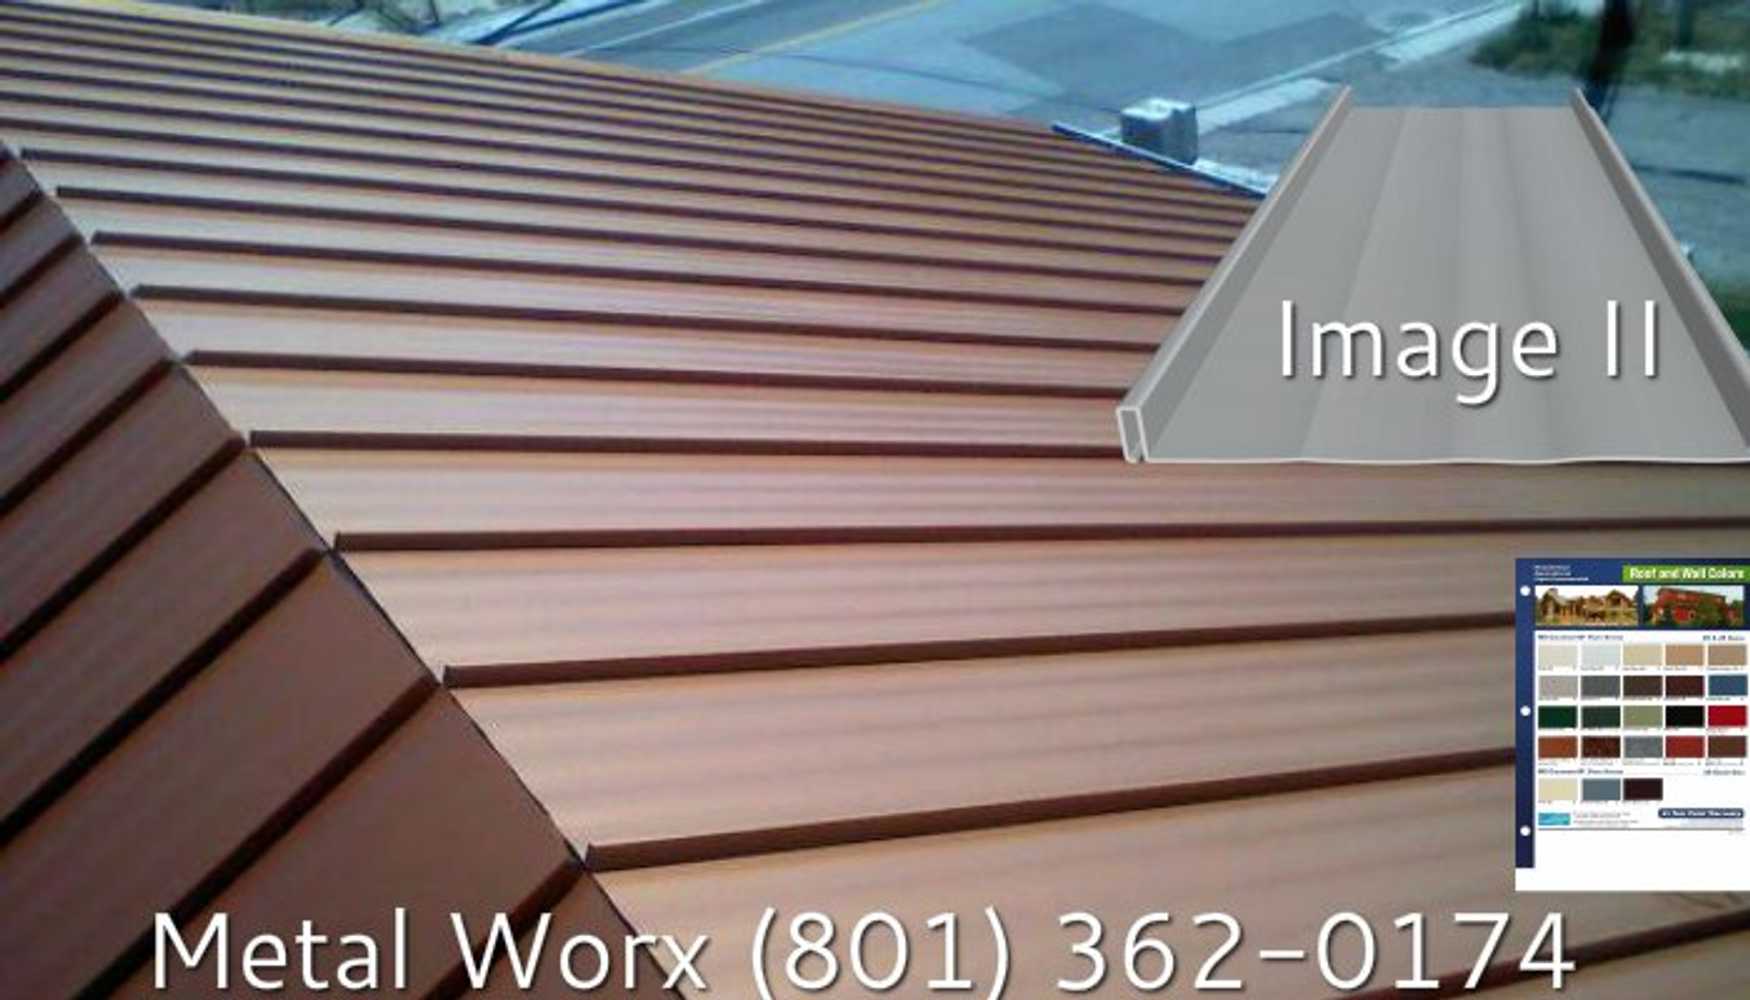 Image II metal roofing